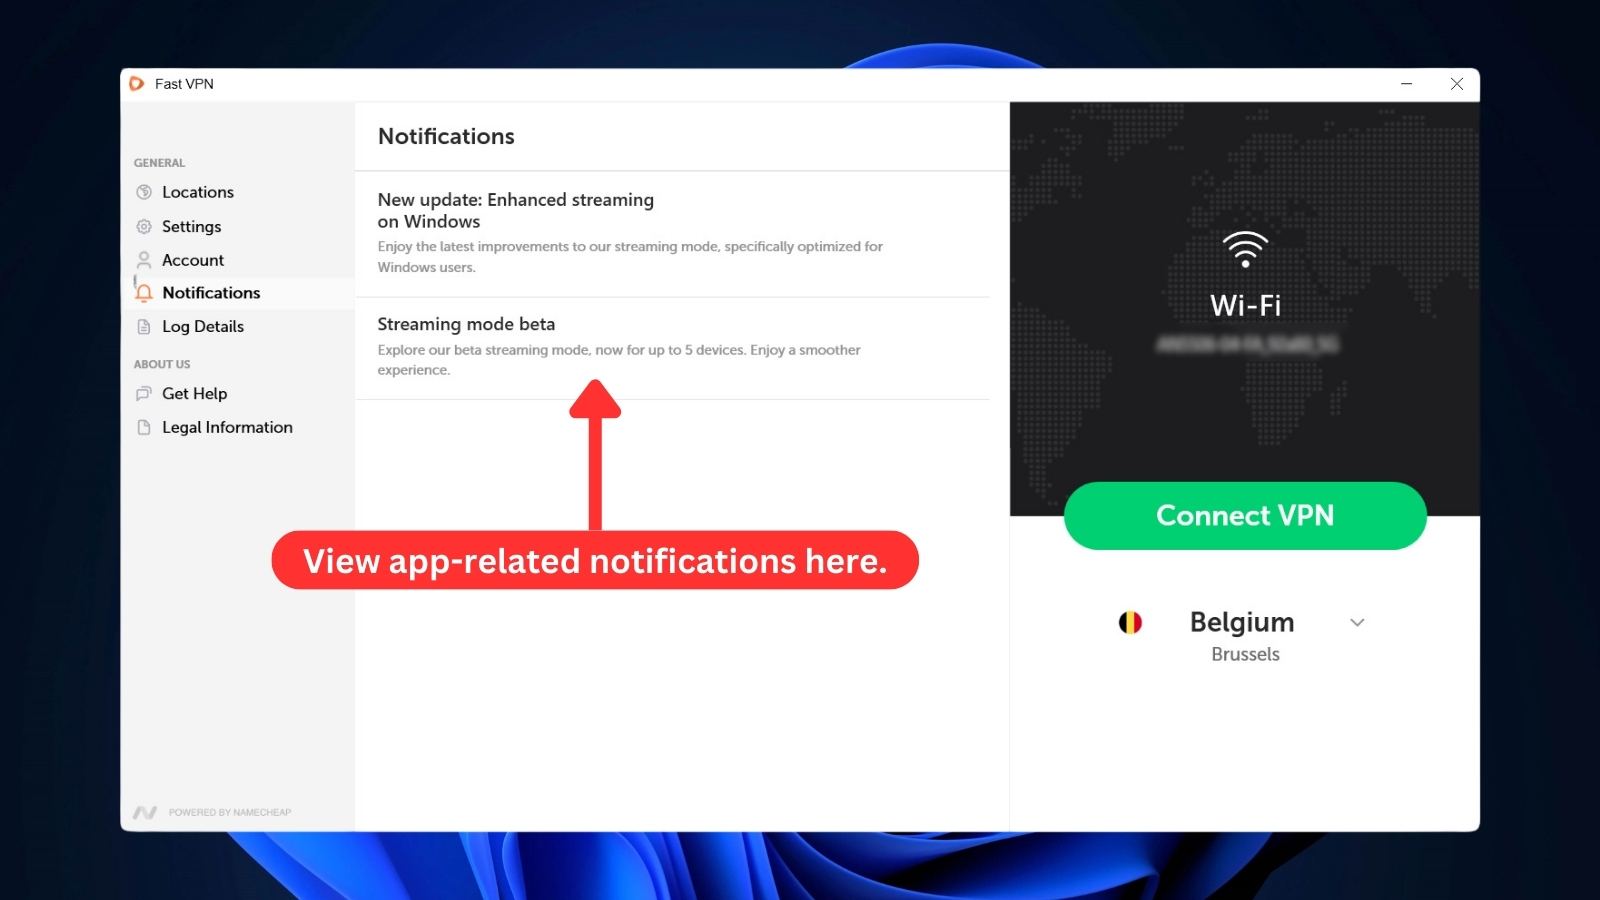 FastVPN Windows app showing notifications